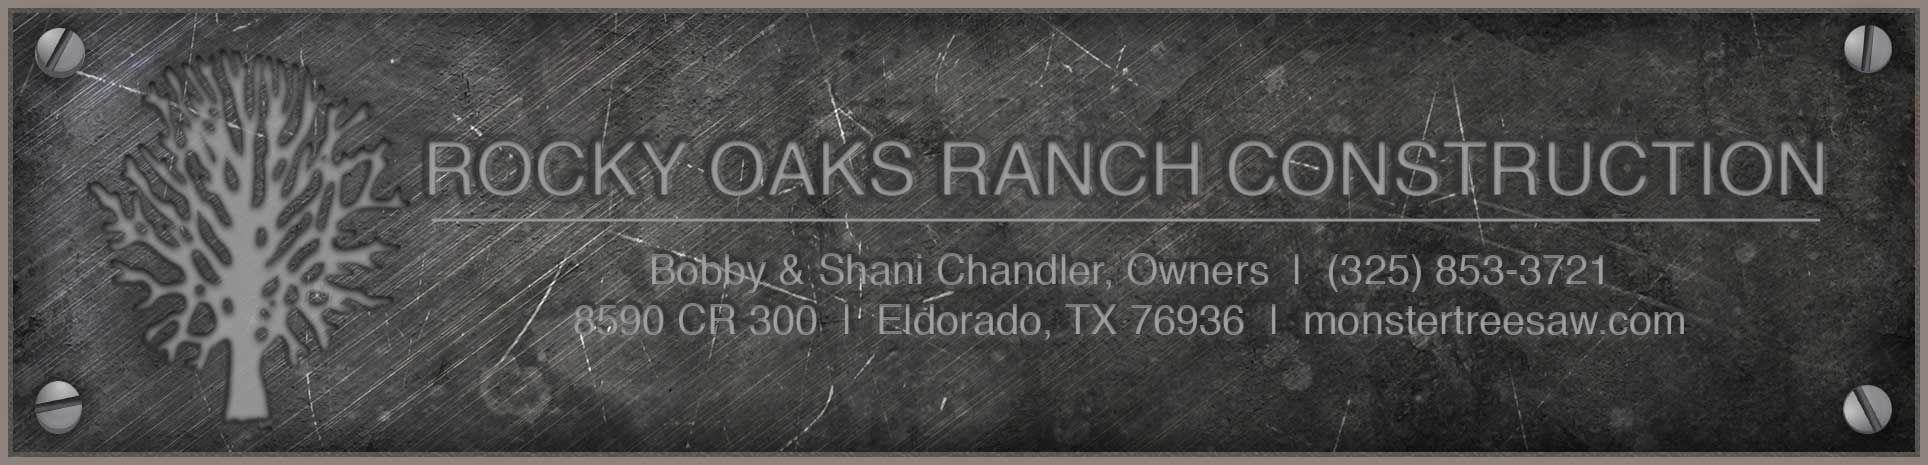 Rocky Oaks Ranch Construction